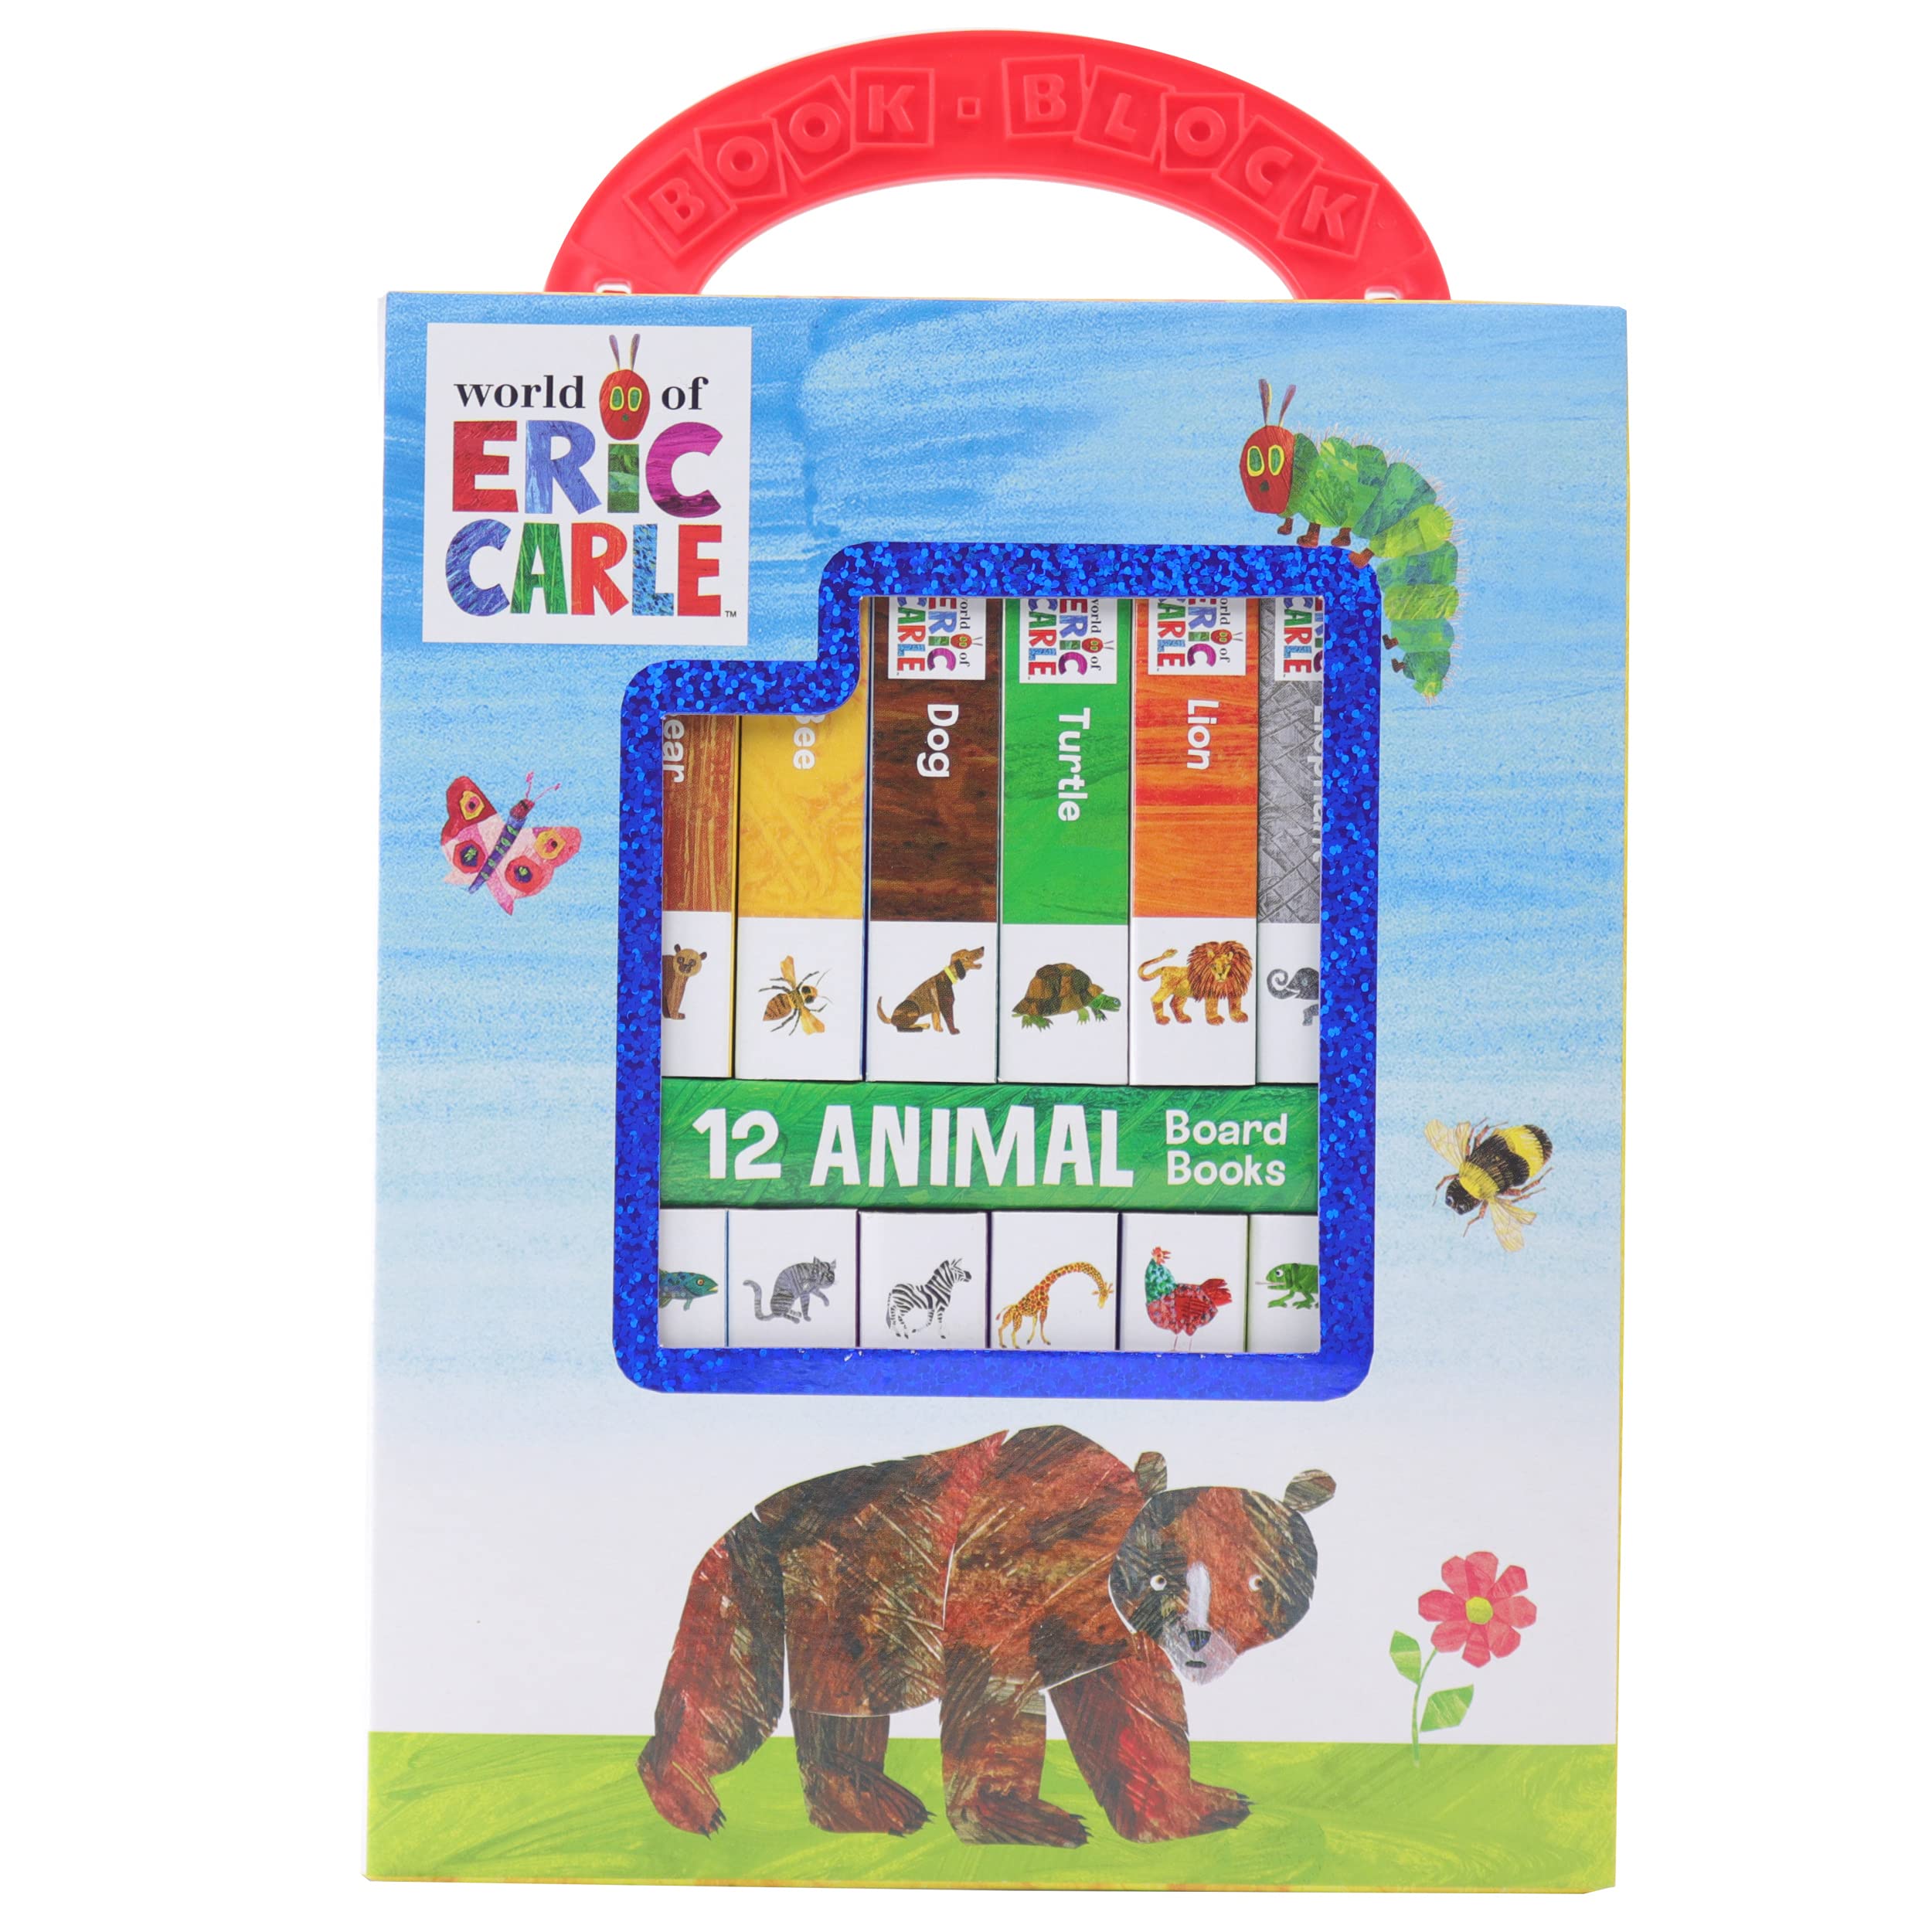 World of Eric Carle: 12 Animal Board Books: 12 Animal Board Books by Pi Kids